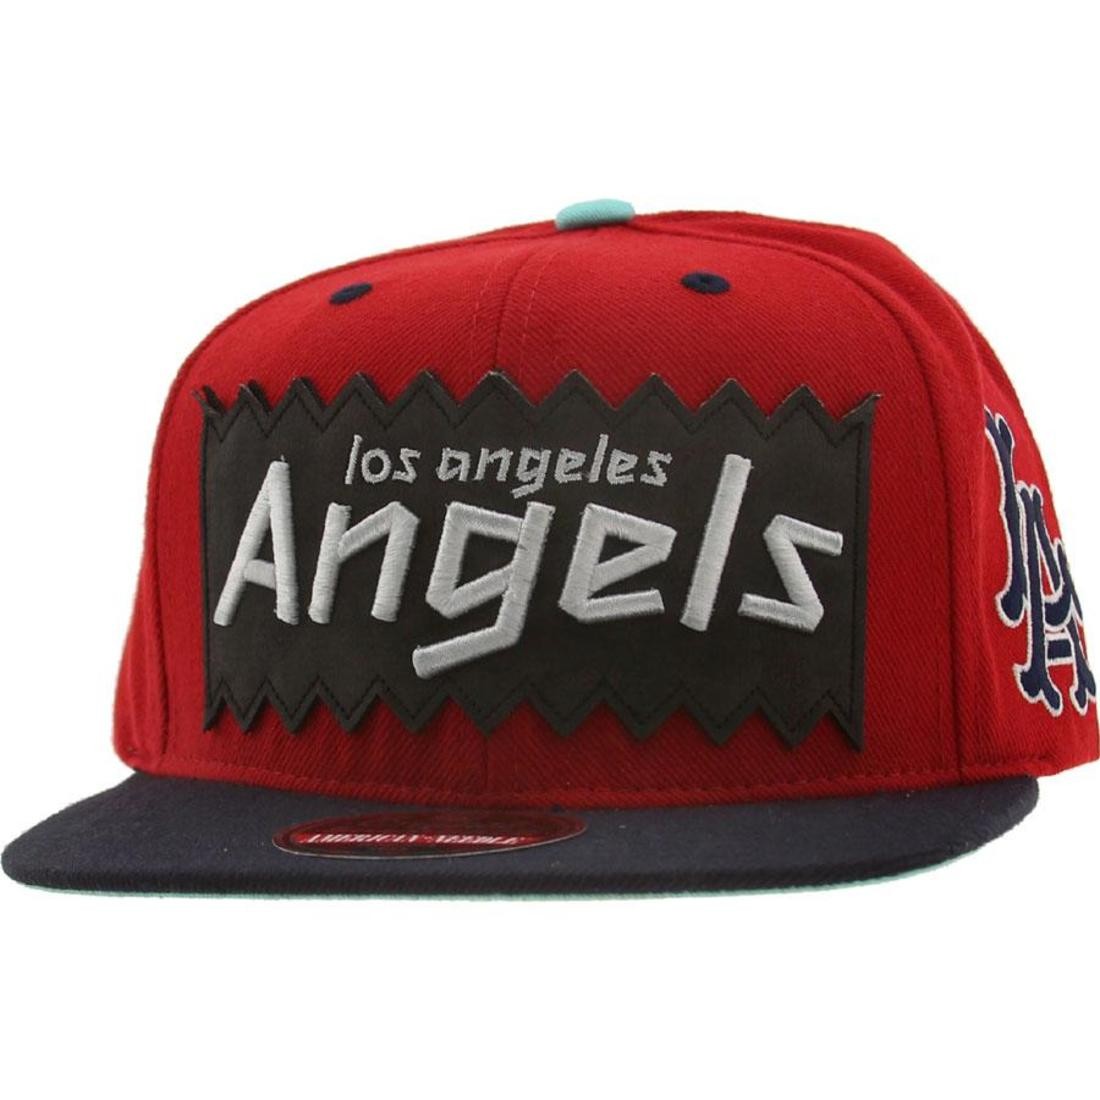 Cheap Urlfreeze Jordan Outlet x MLB x American Needle Los Angeles Angels Retro Snapback Cap (red / navy)